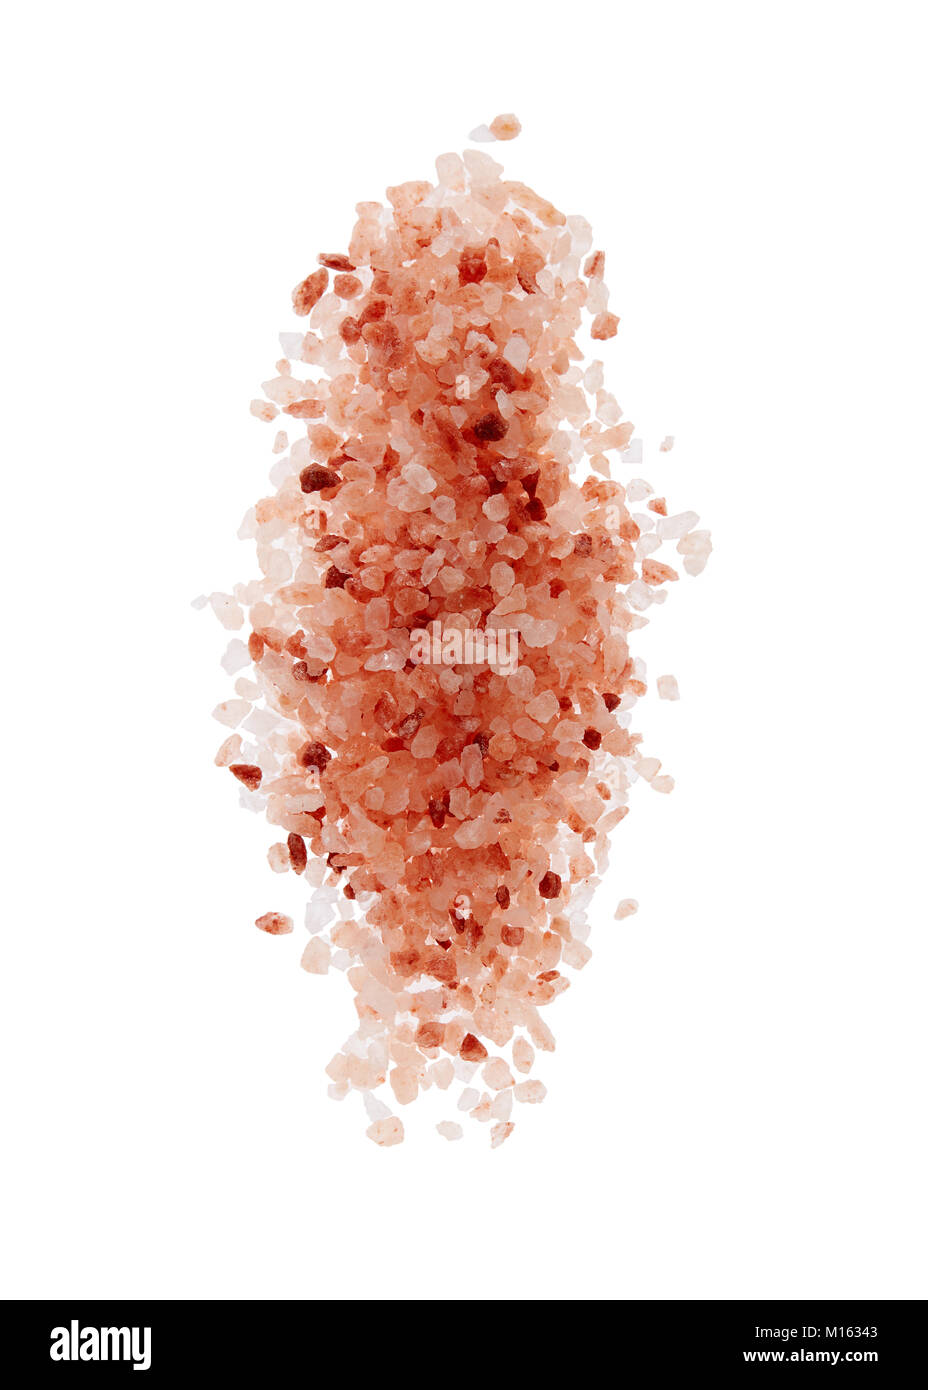 Les cristaux de sel de l'himalaya rose. Sel de l'himalaya sur fond blanc. Banque D'Images